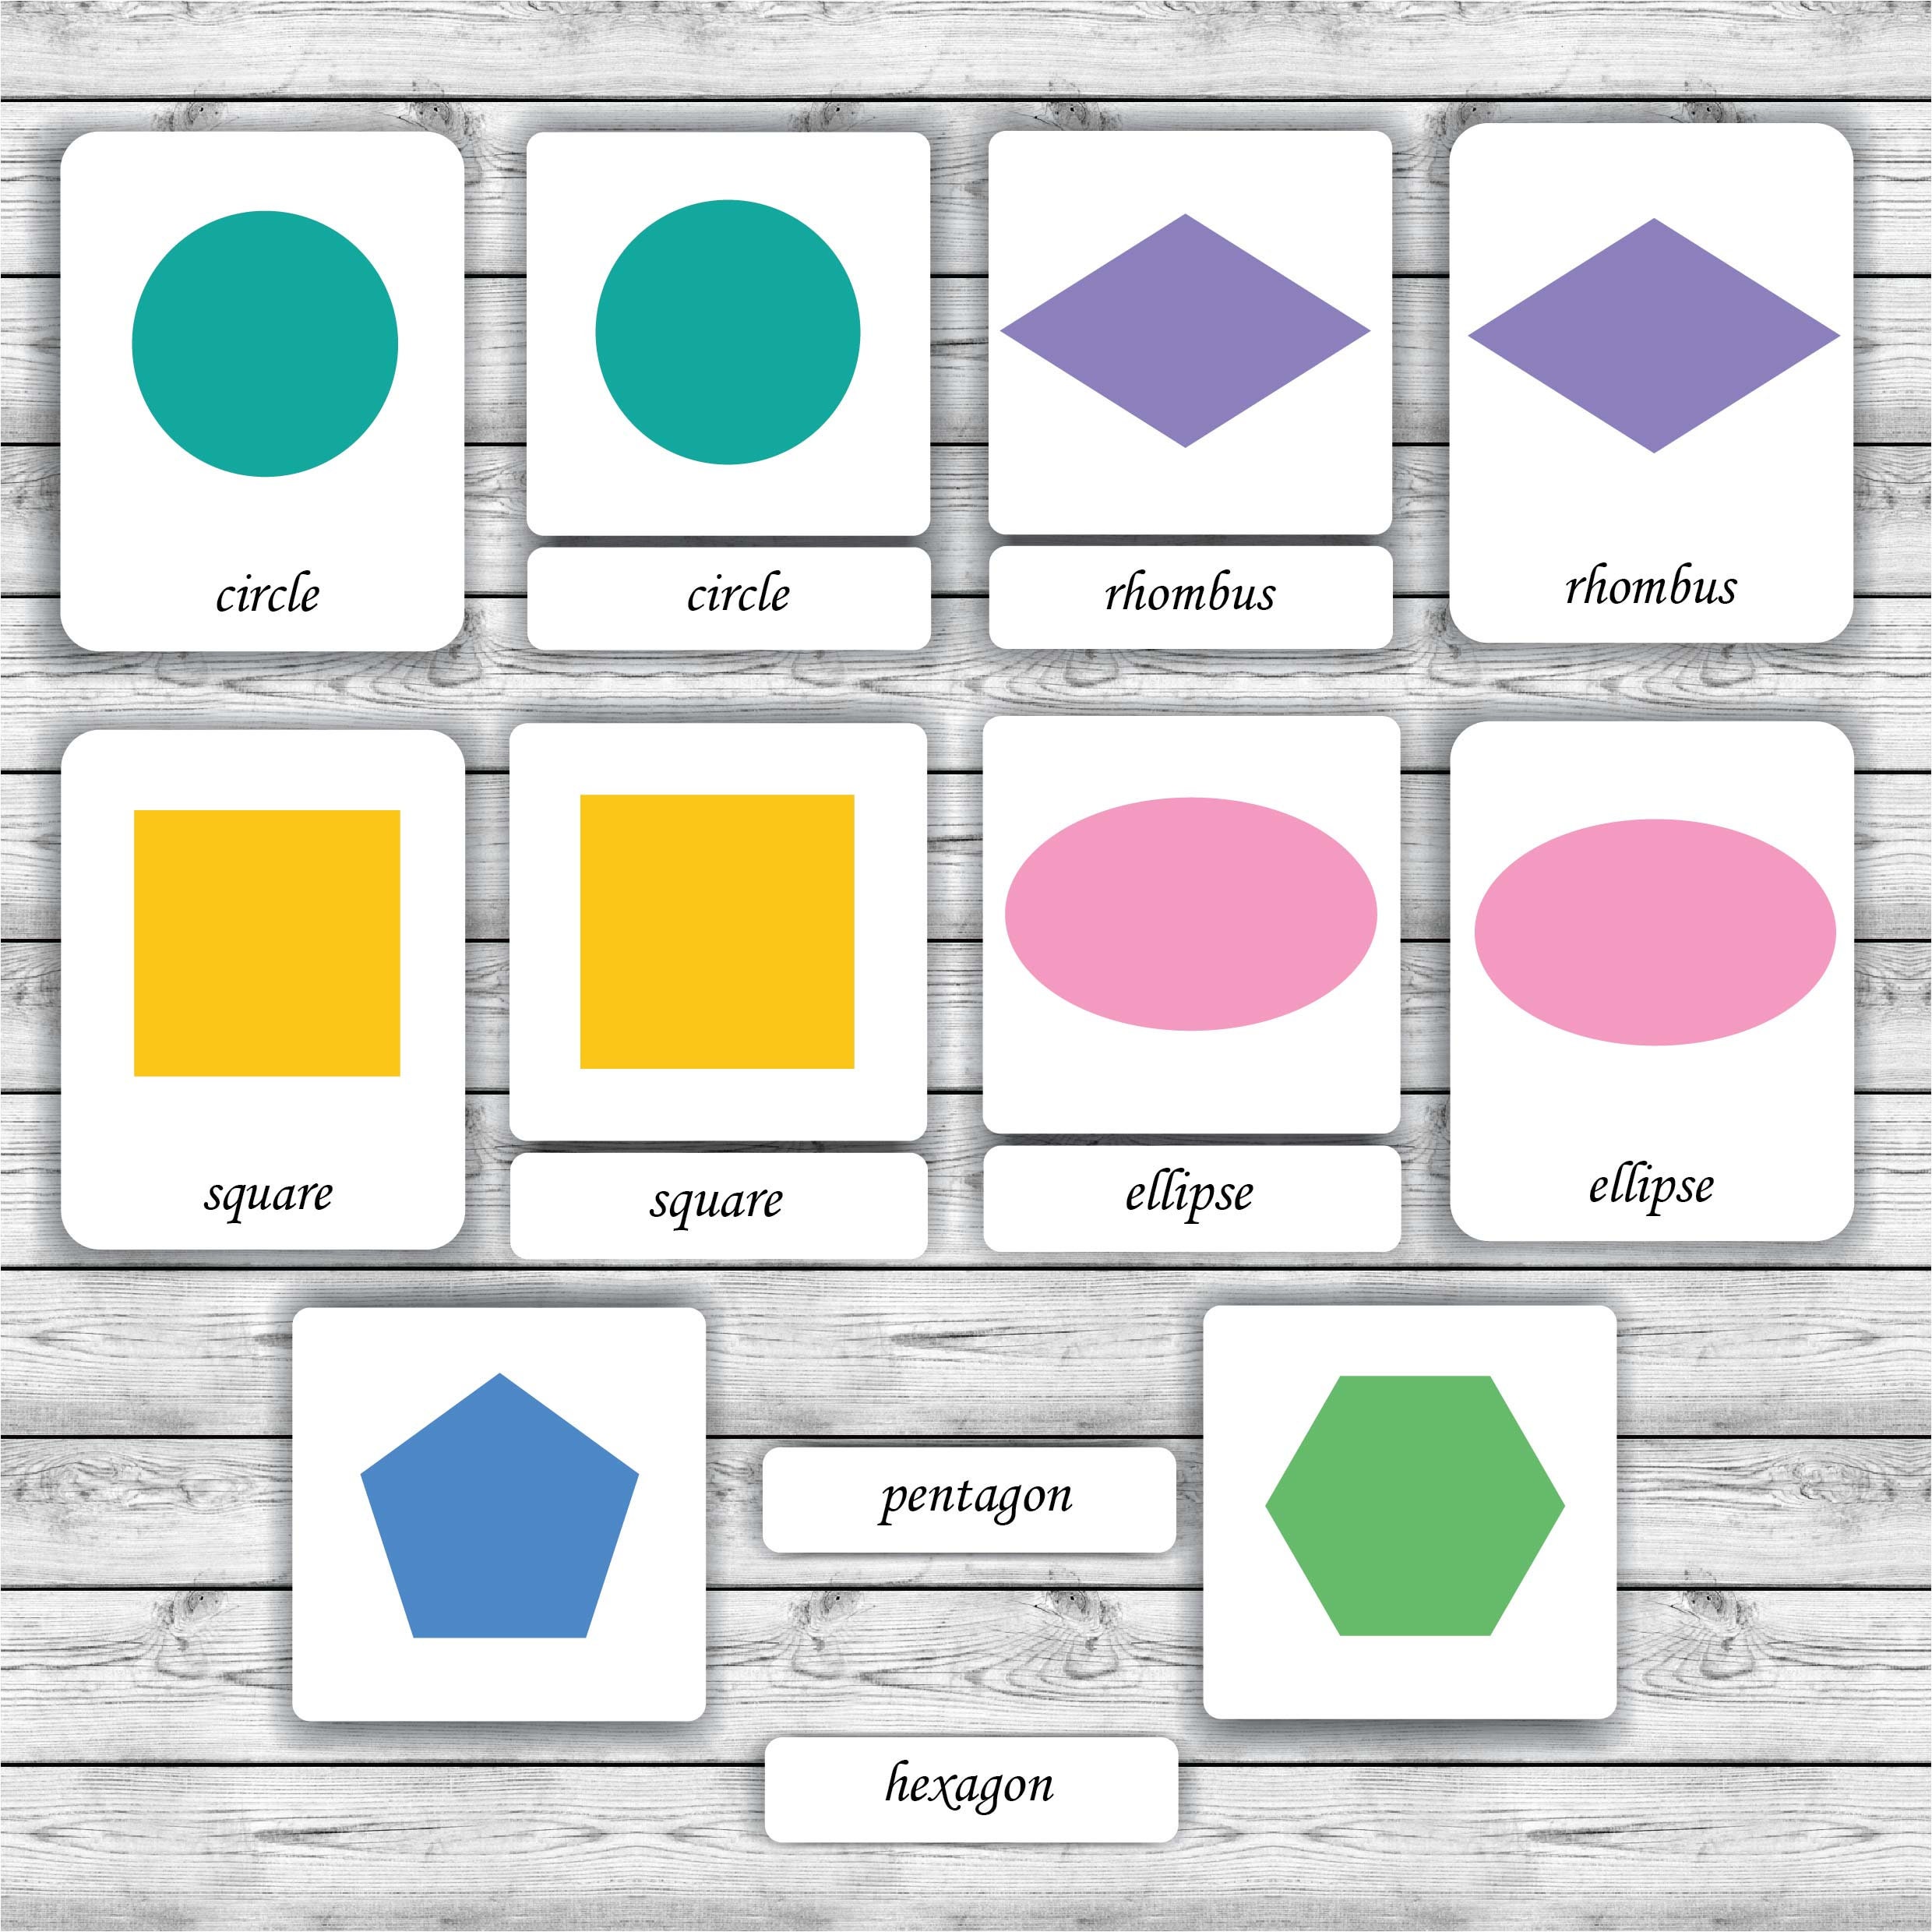 shapes-2d-montessori-cards-for-children-preschool-etsy